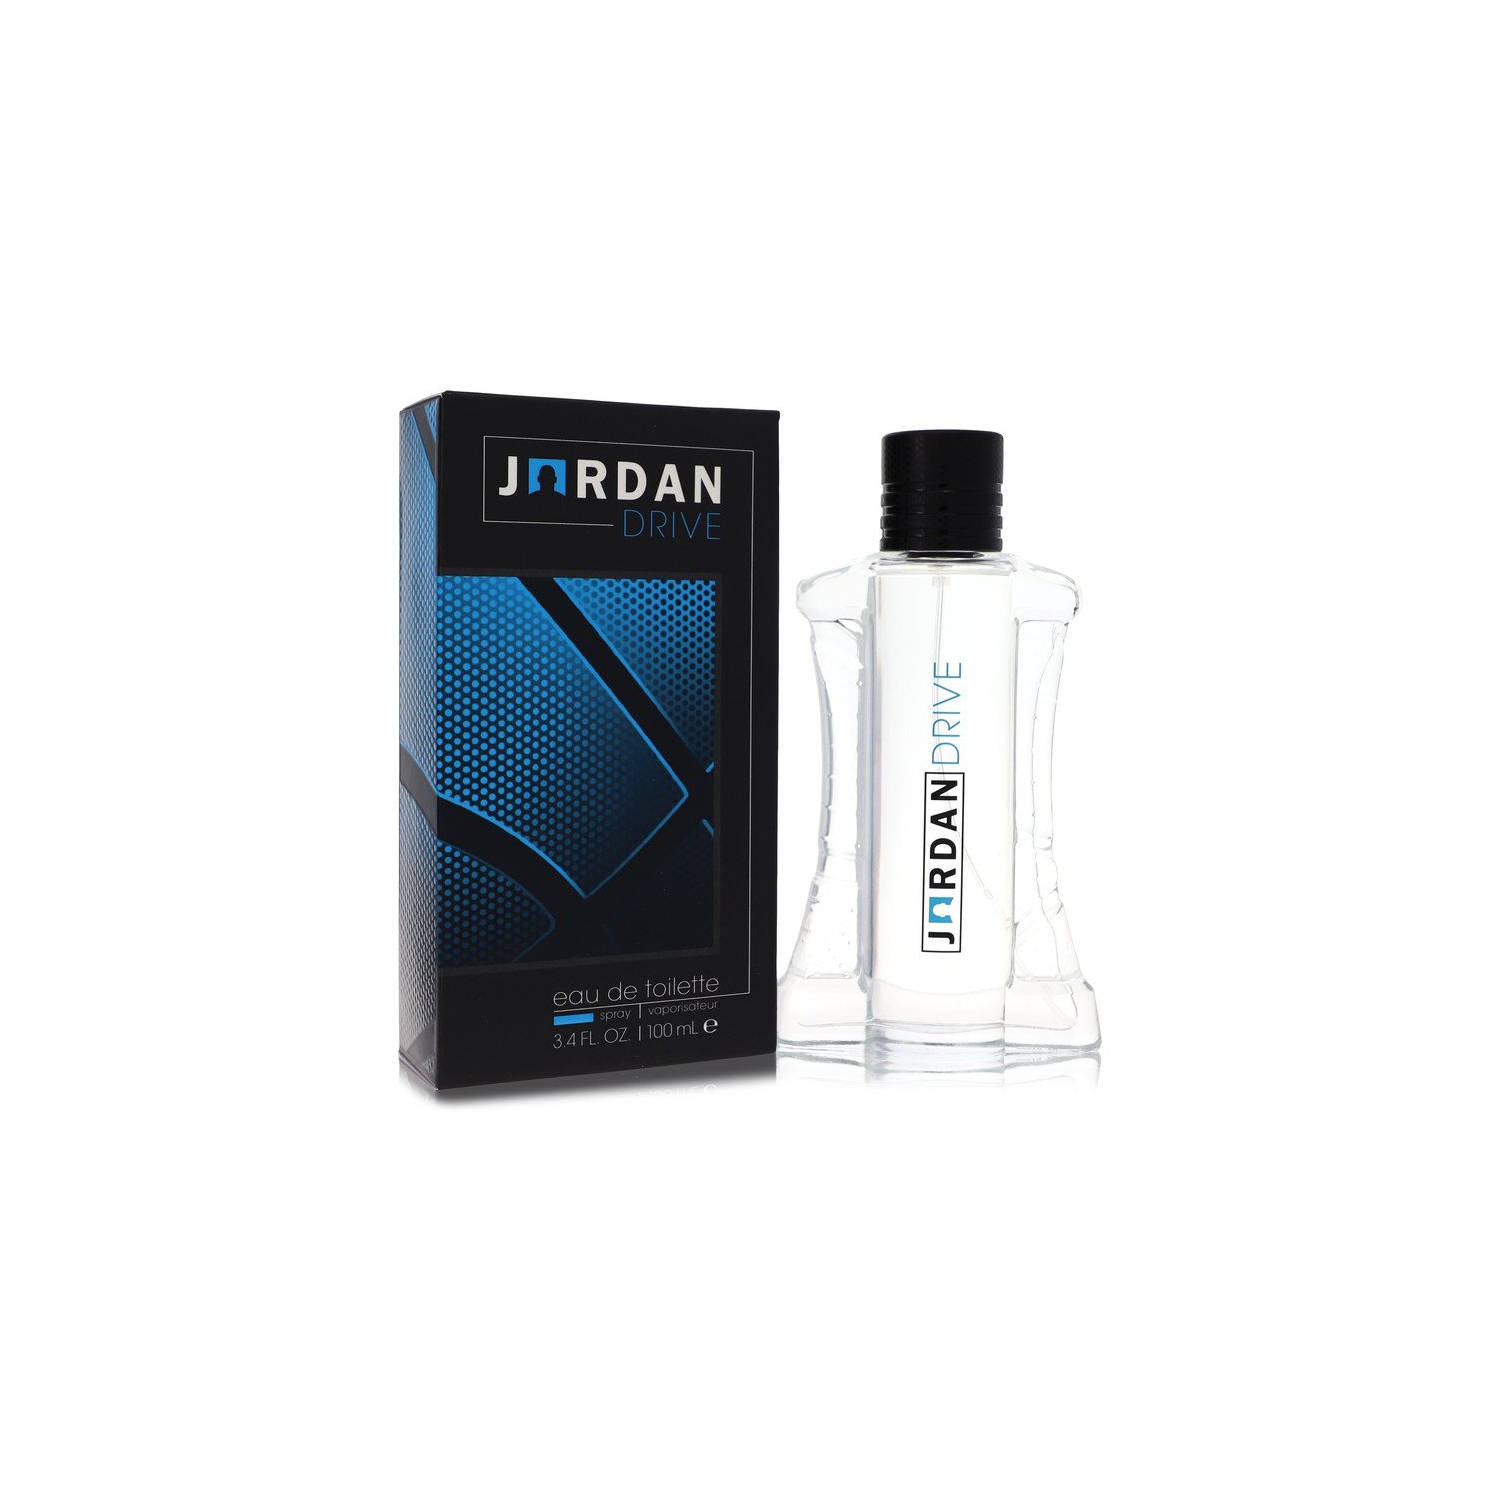 Jordan Drive by Michael Jordan Eau De Toilette Spray 3.4 oz for Men